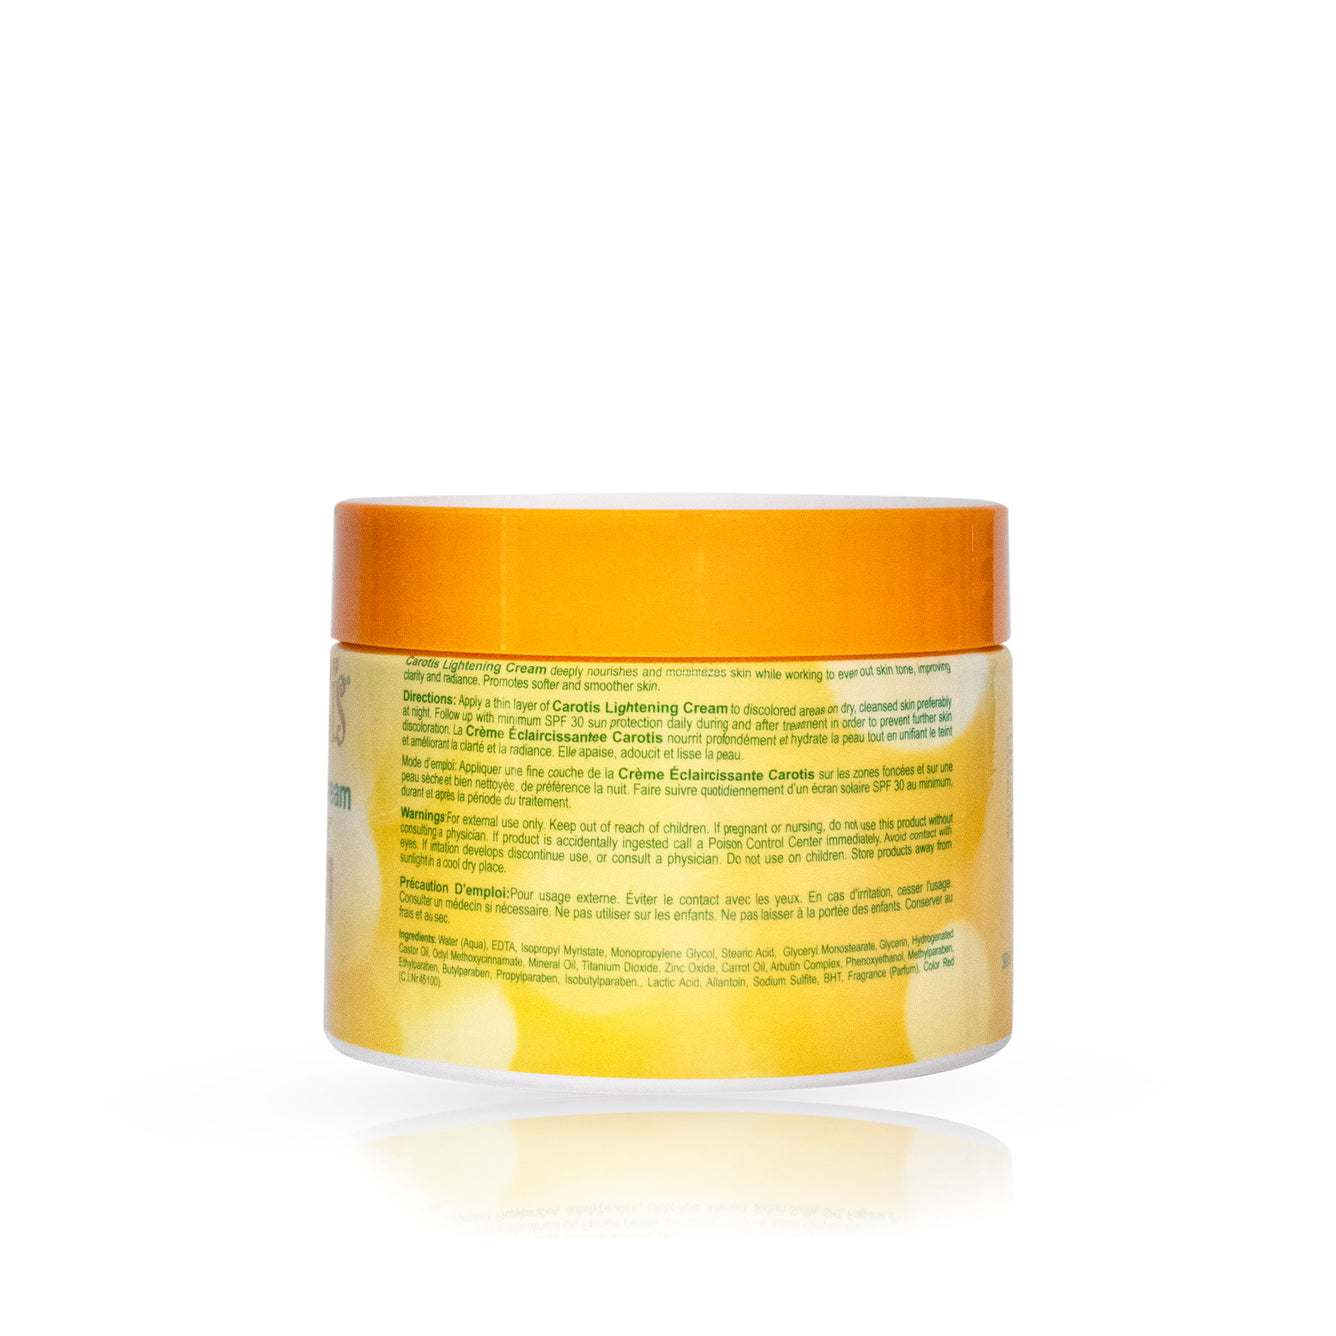 Carotis 7 Day Lightening Cream with Vitamin A (Jar) - 300ml / 10.14 fl oz Carotis - Mitchell Brands - Skin Lightening, Skin Brightening, Fade Dark Spots, Shea Butter, Hair Growth Products